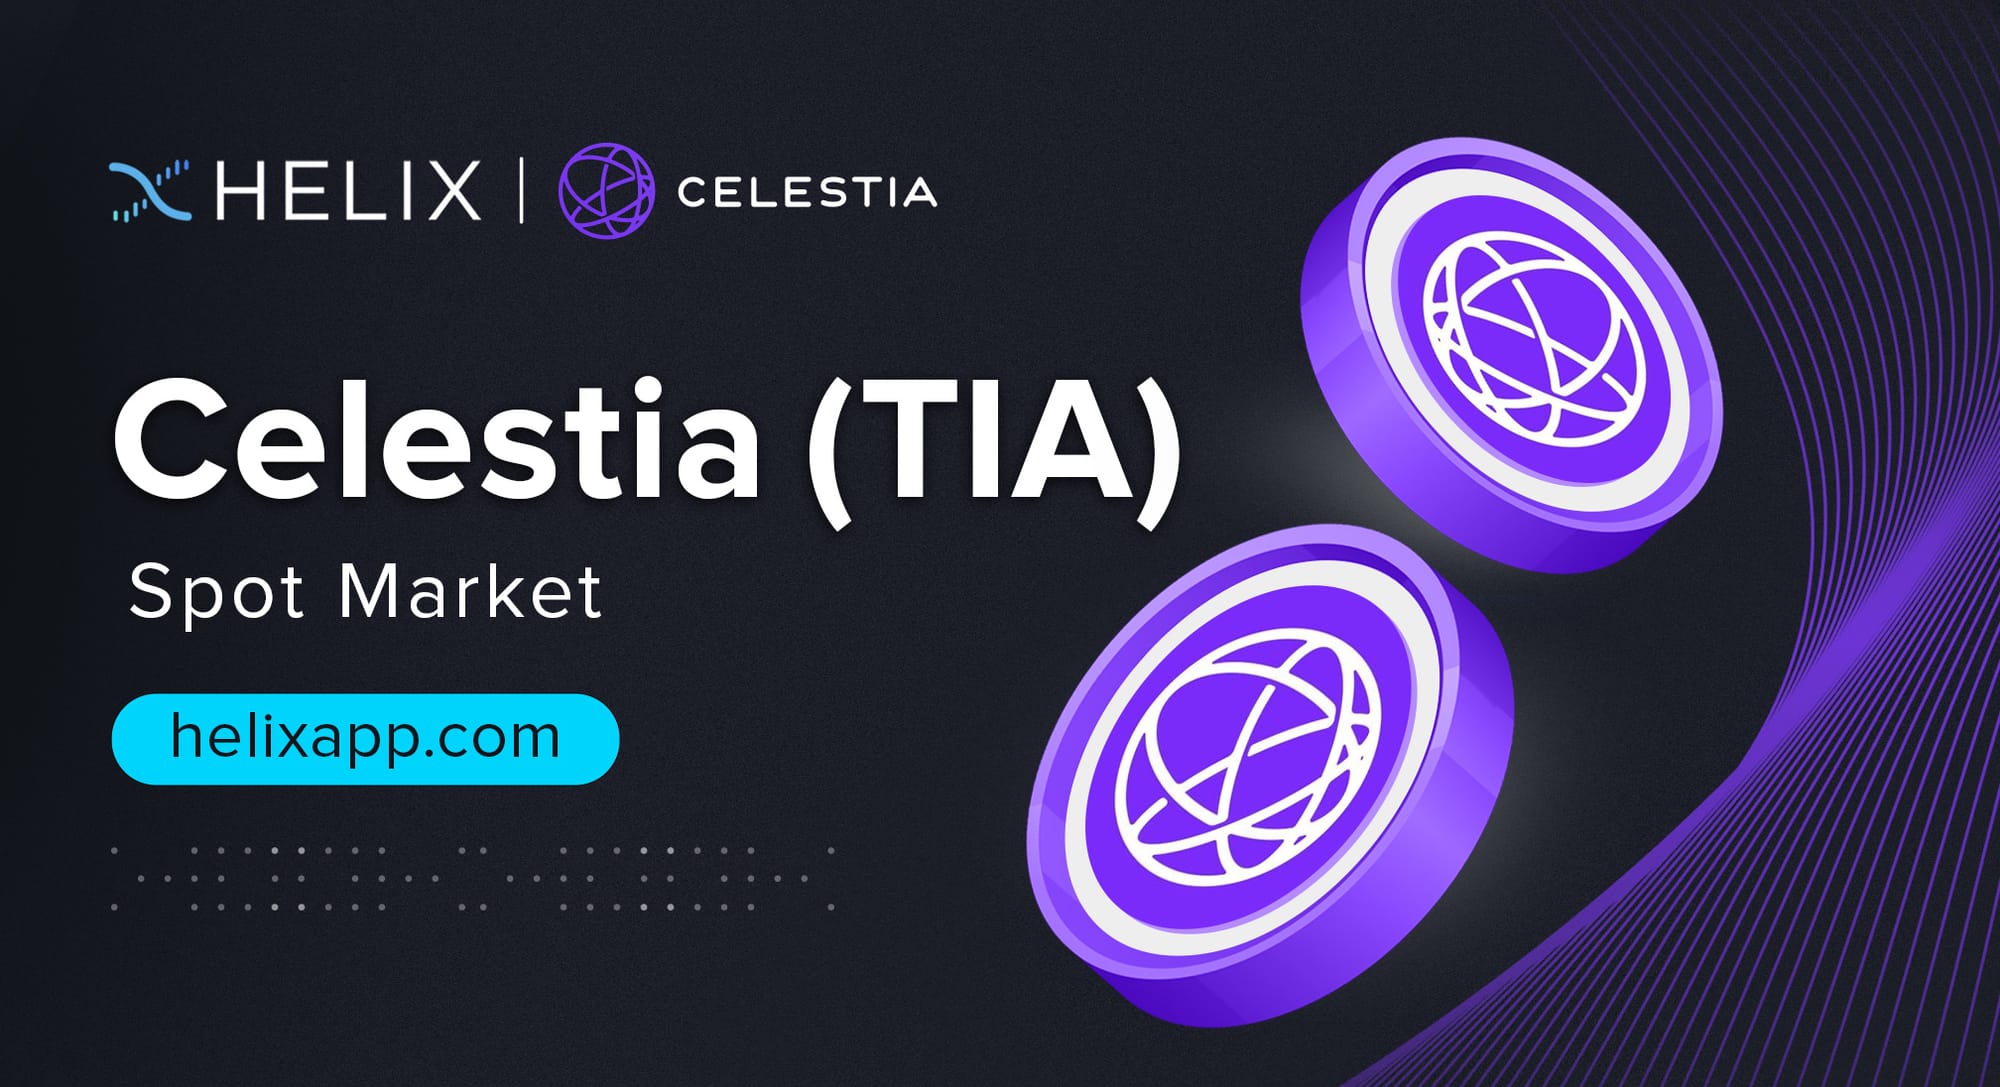 The World’s First Celestia (TIA) Spot Market Listing on Helix